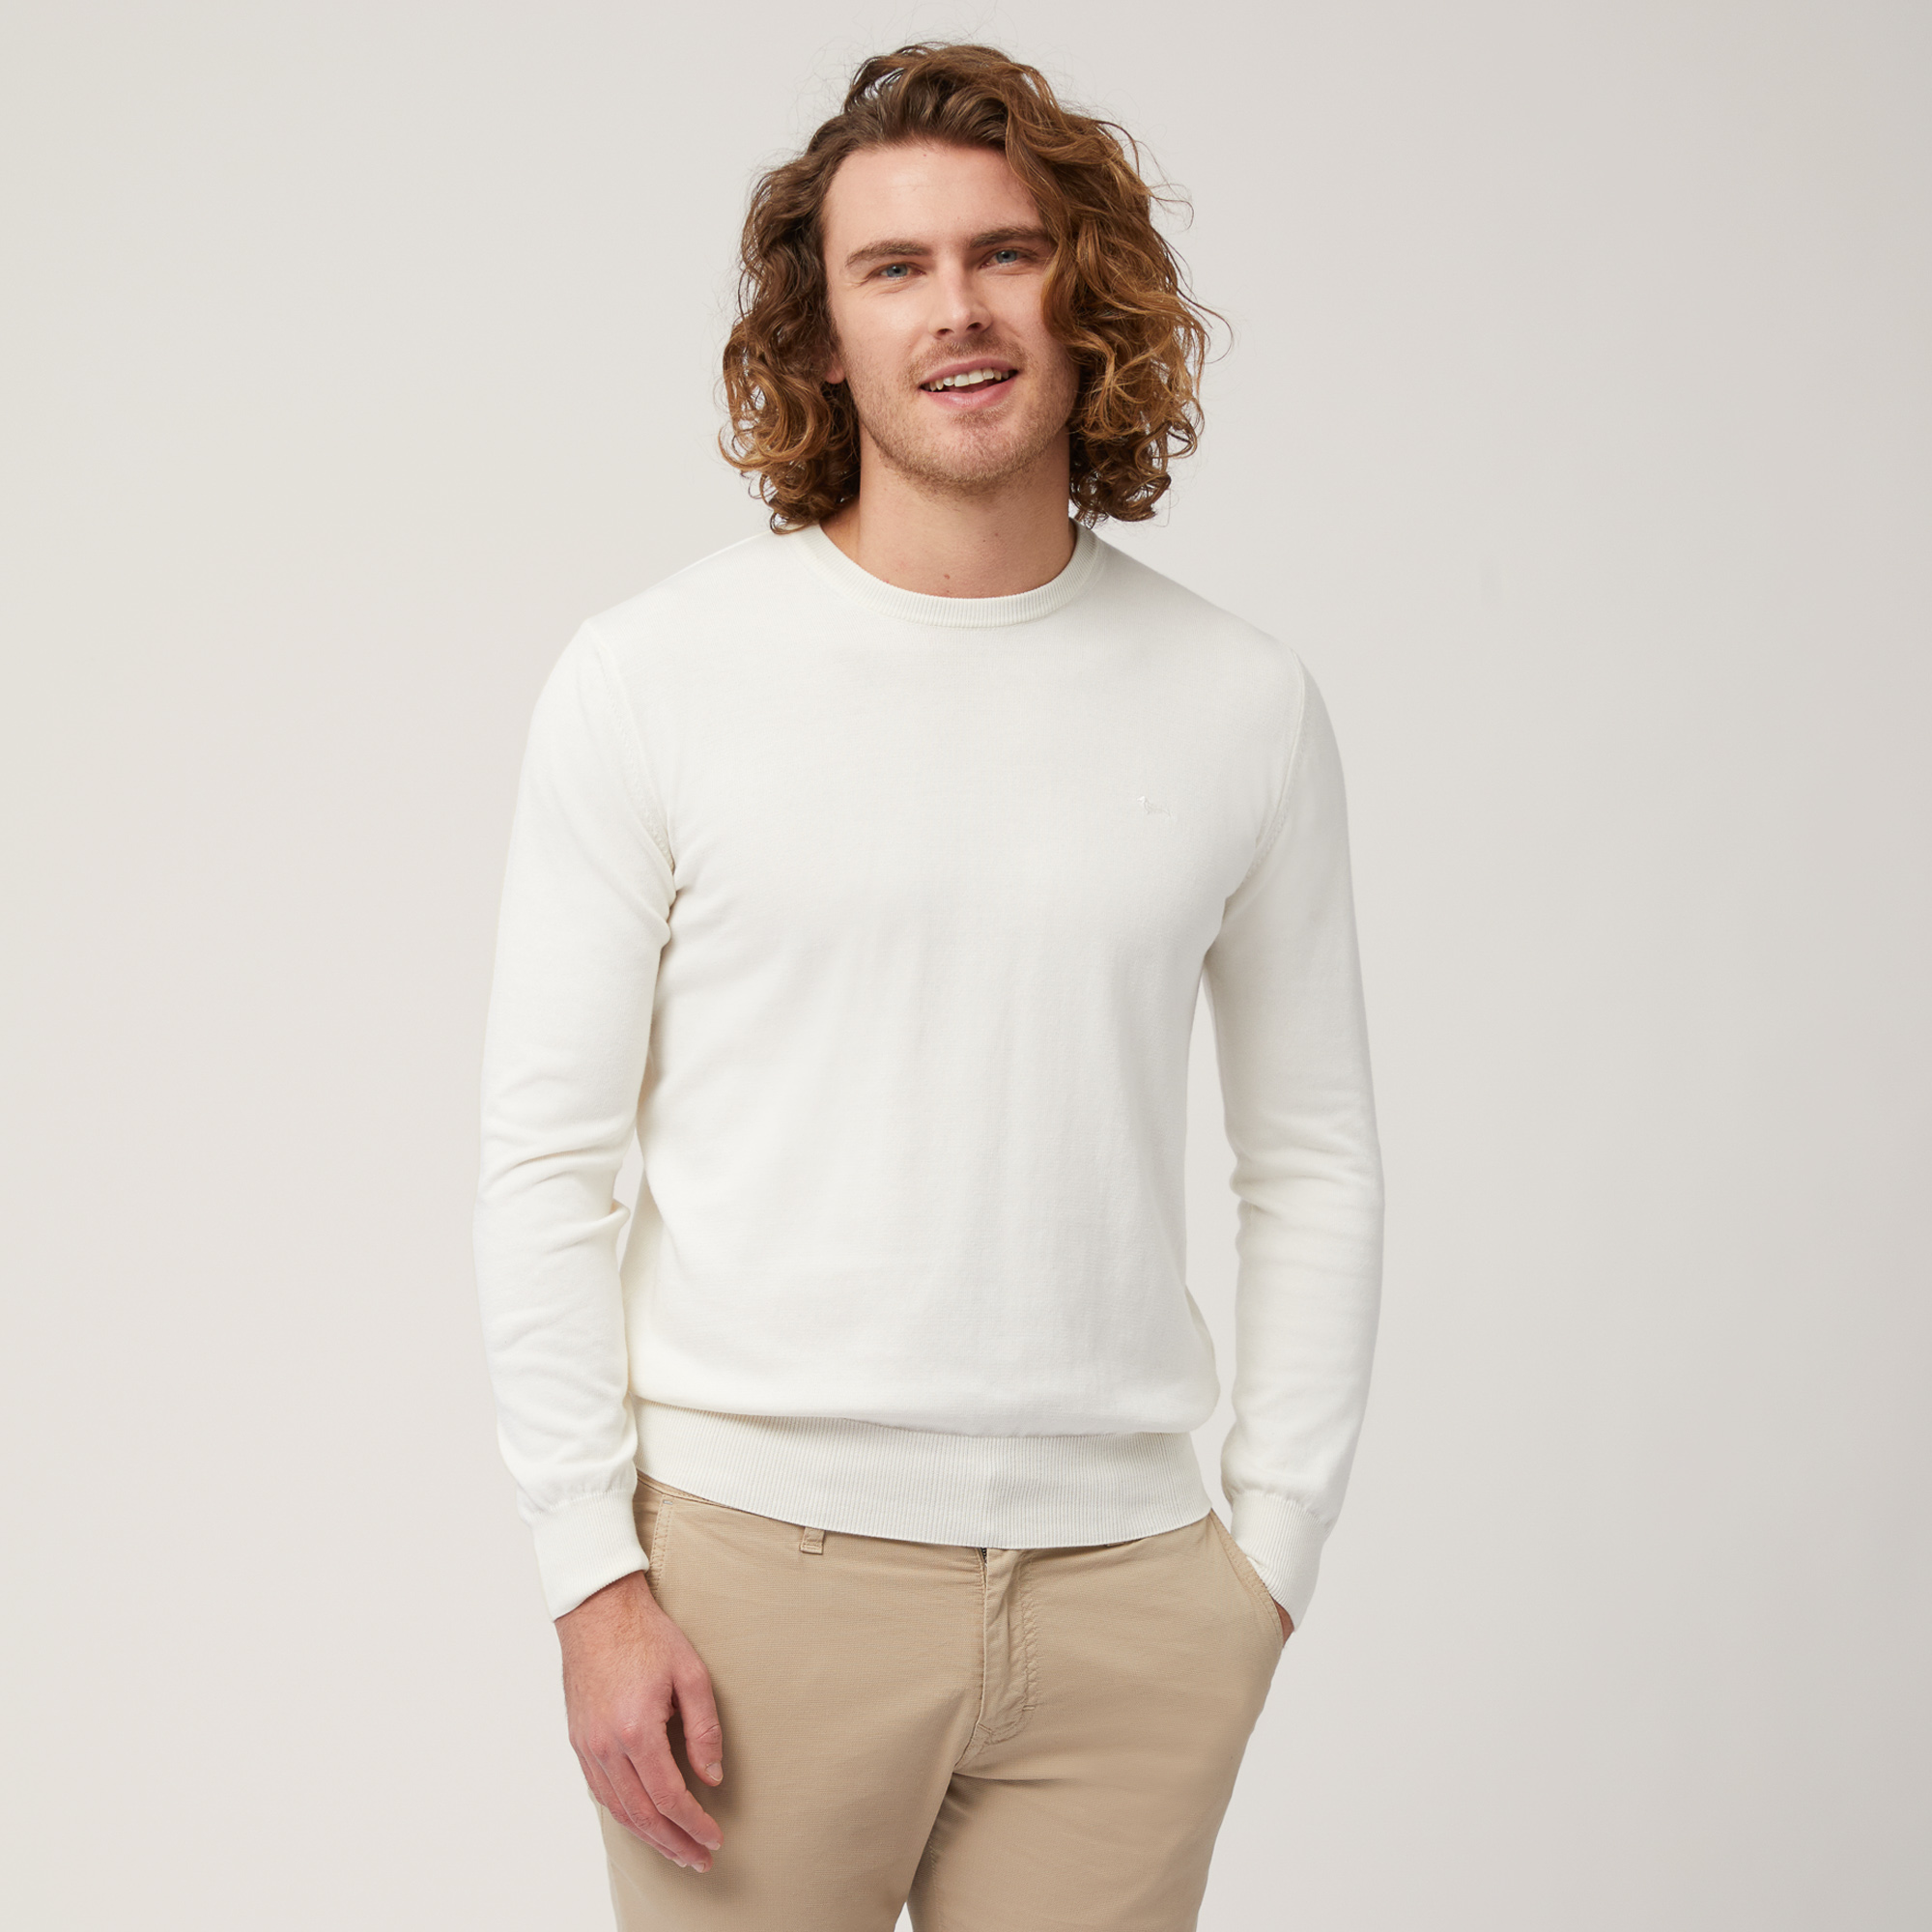 Cotton Crew Neck Pullover, White, large